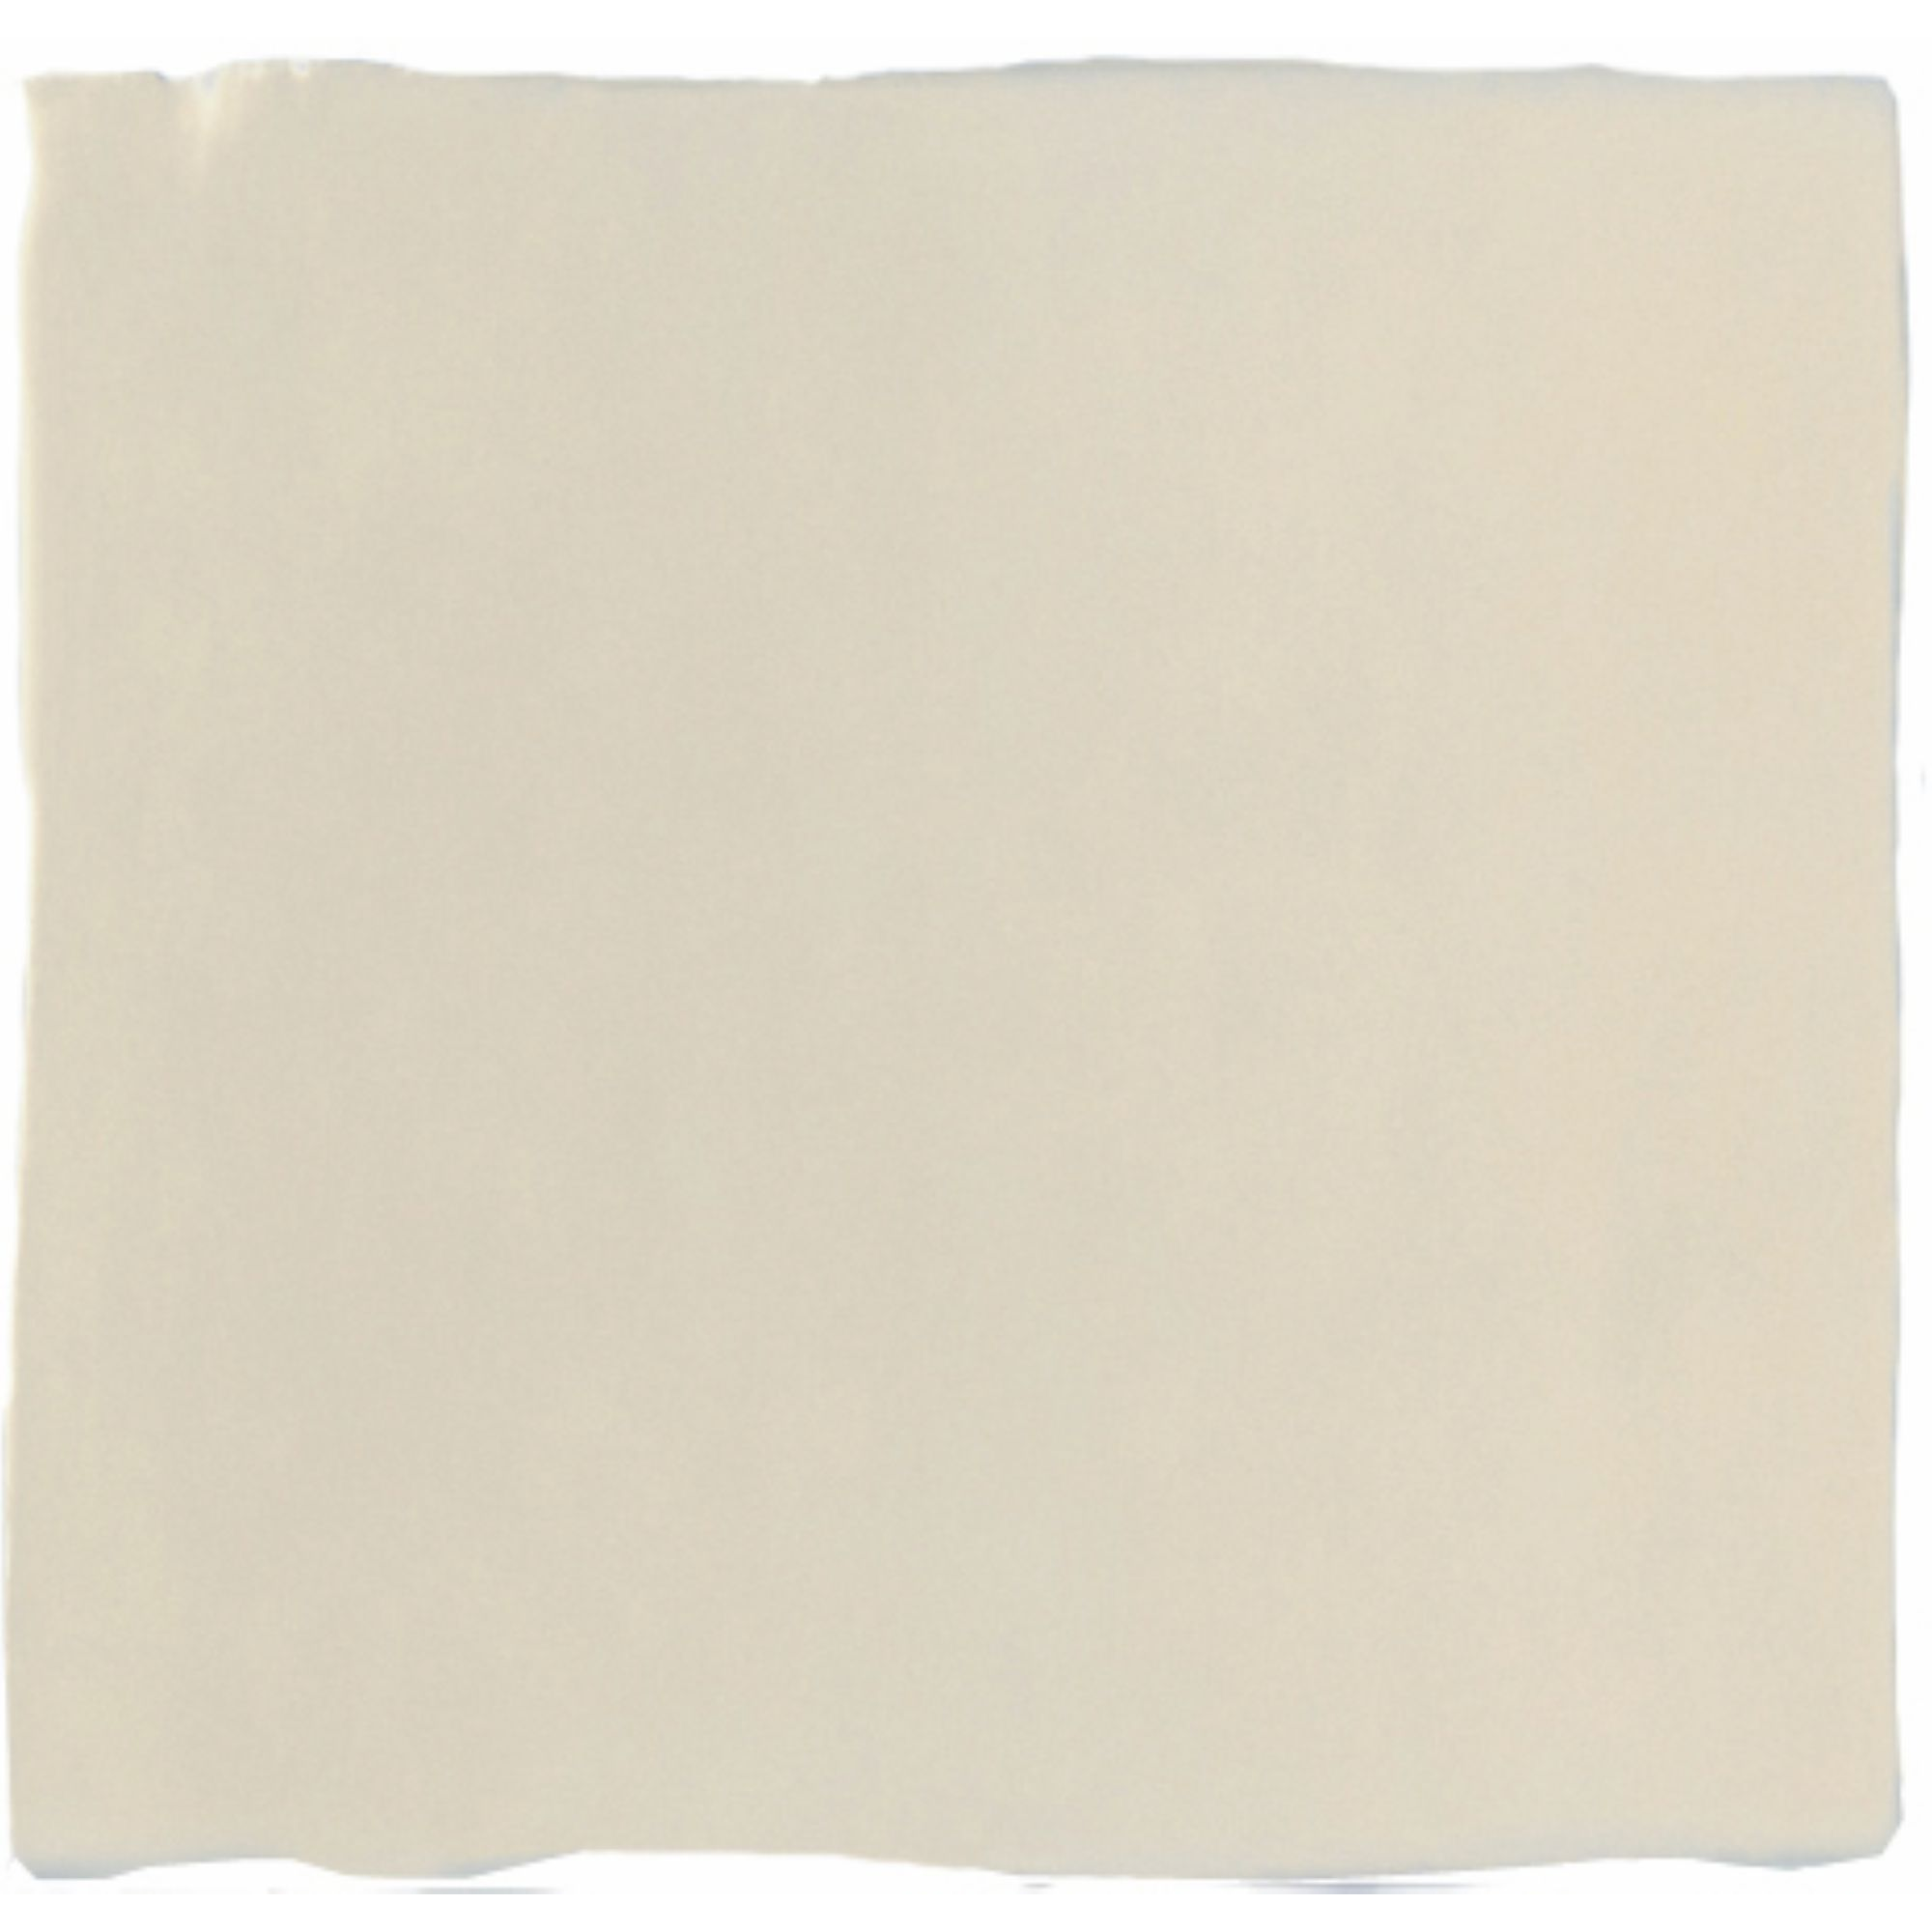 Wandfliese 'Crayon' beige matt 13 x 13 cm + product picture